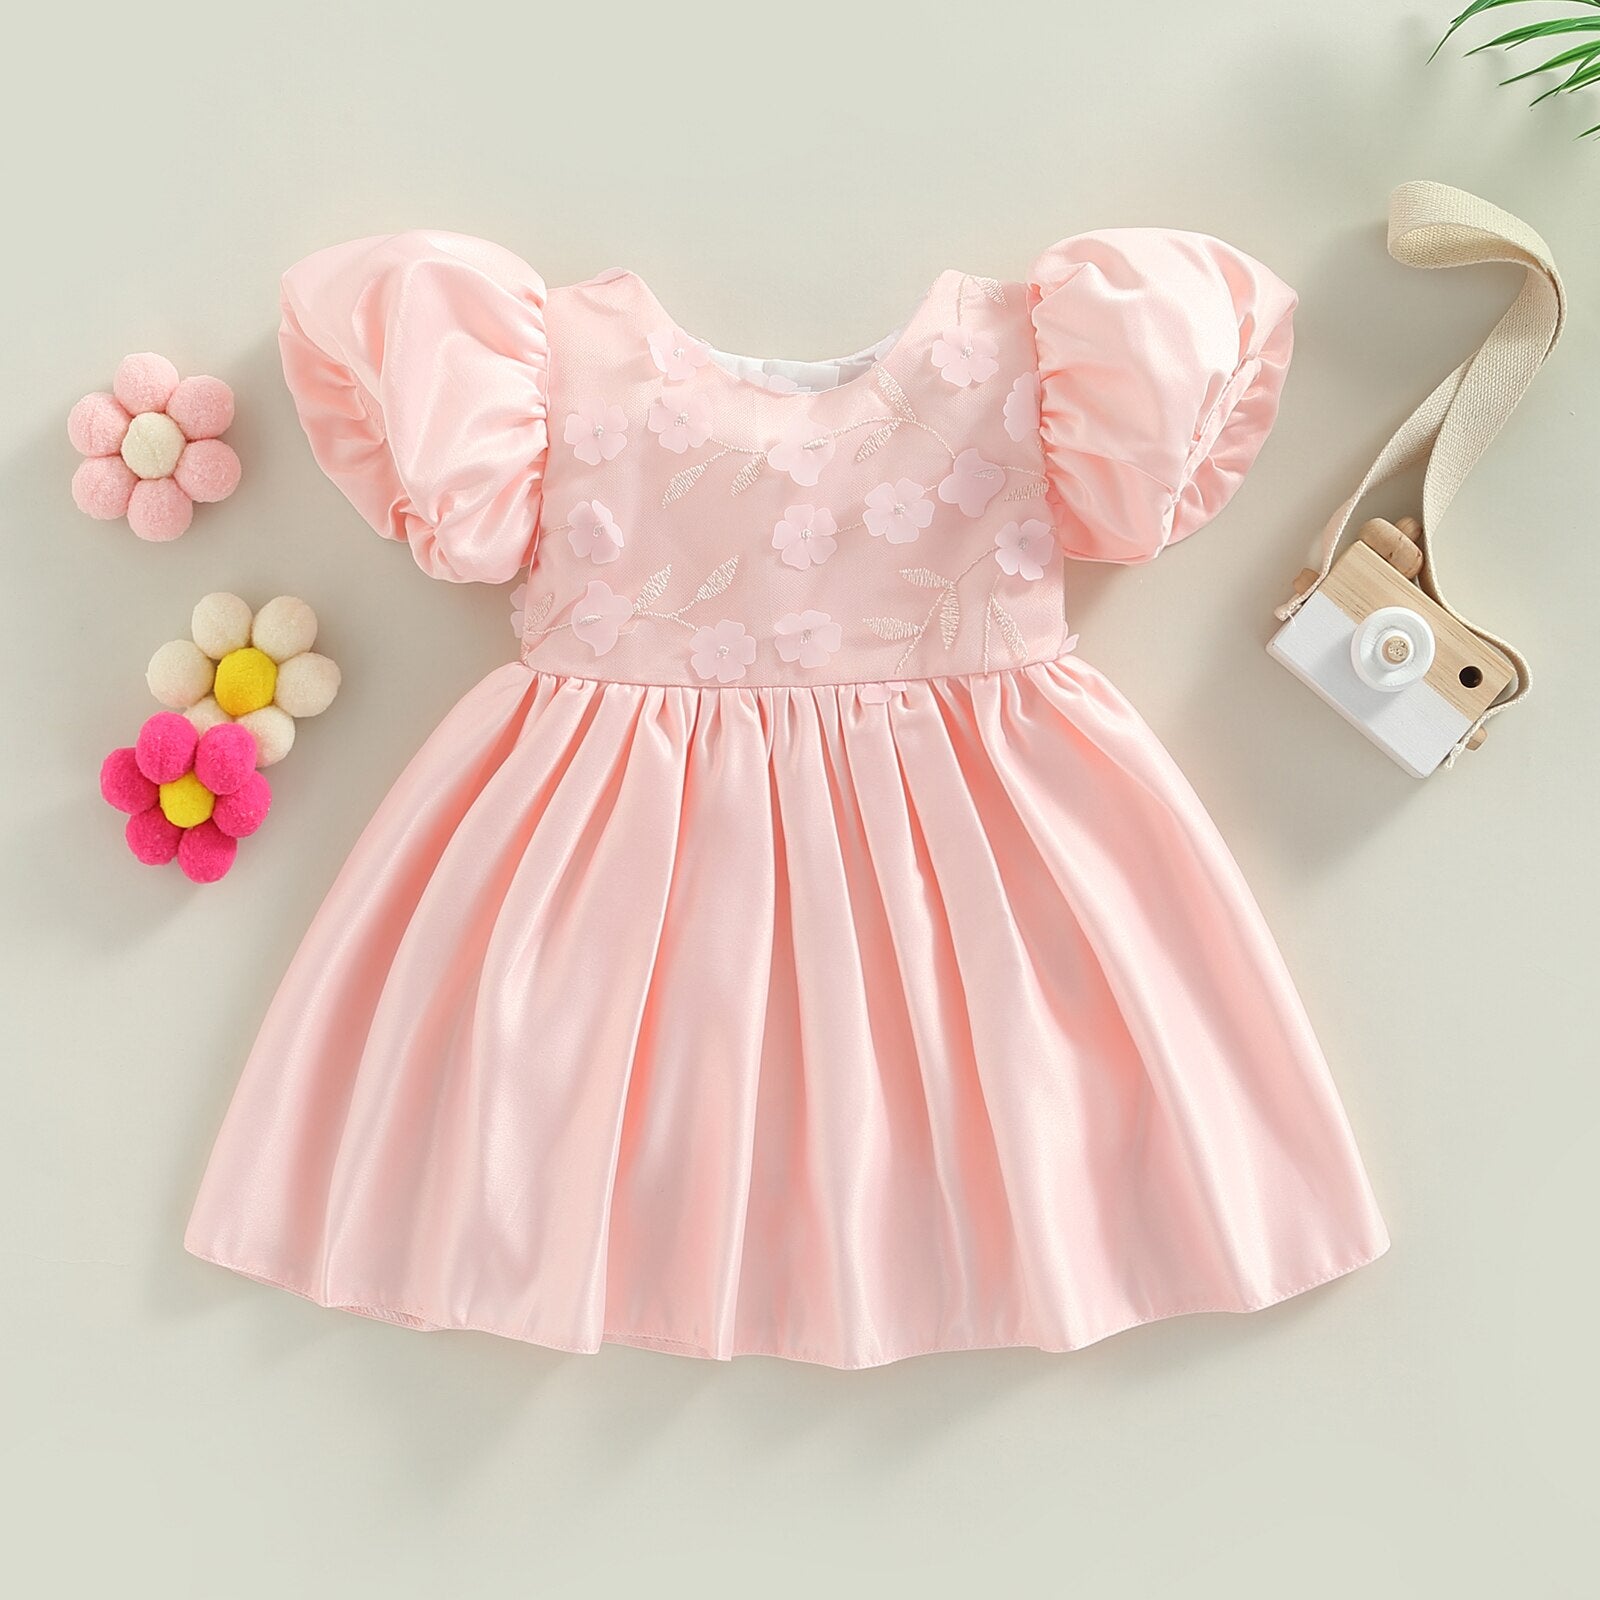 Vestido Infantil Princesa vestido Loja Click Certo Rosa 2-3 anos 57cm 